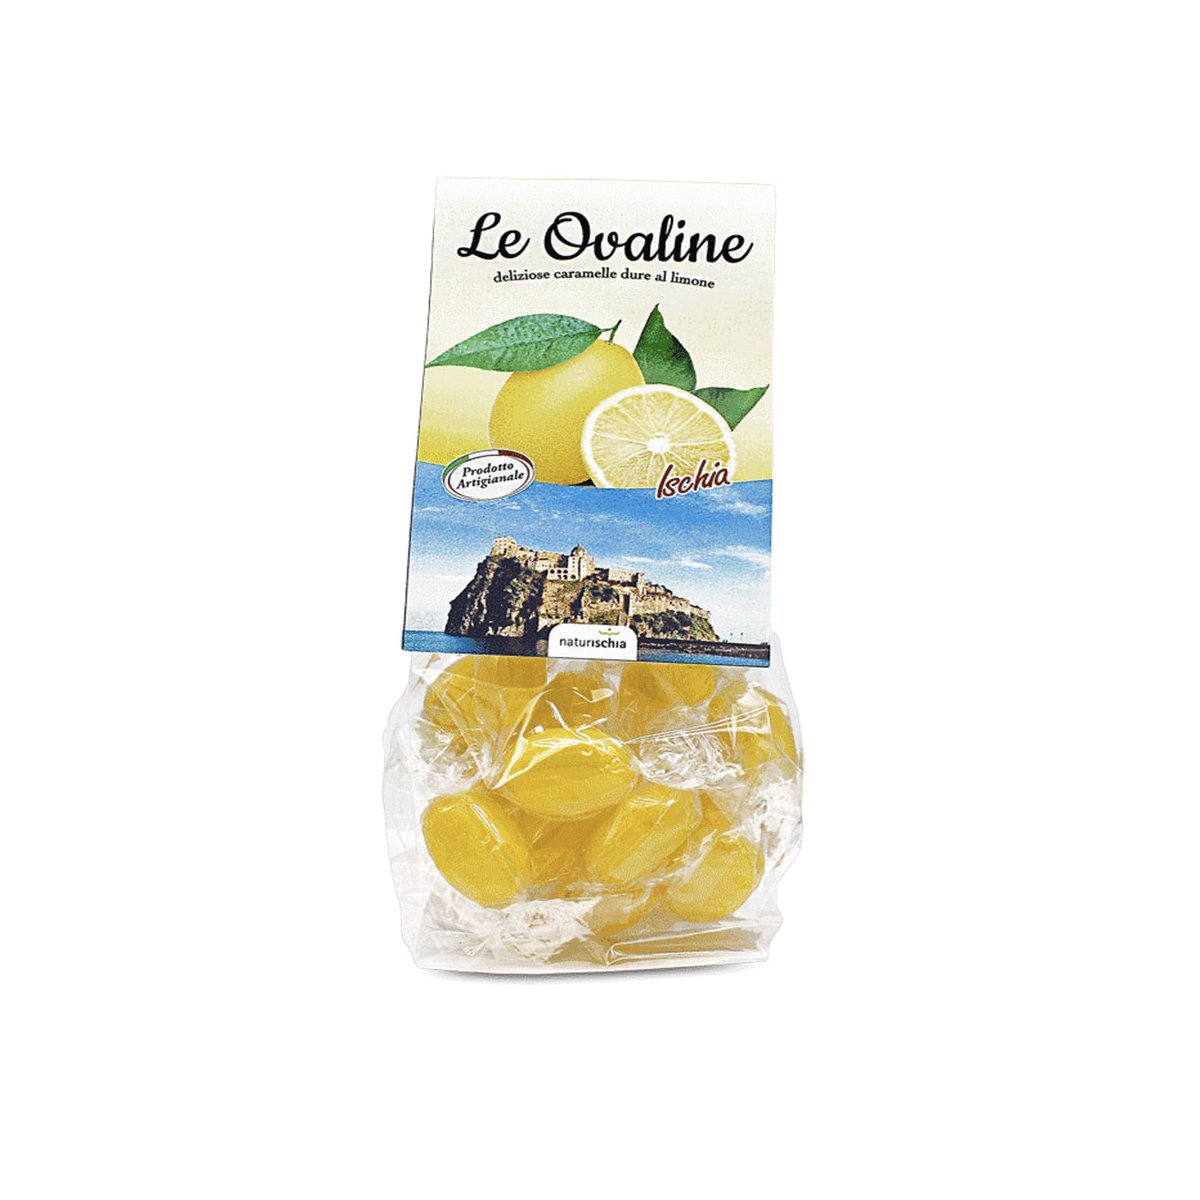 Caramelle dure al limone "Le Ovaline"